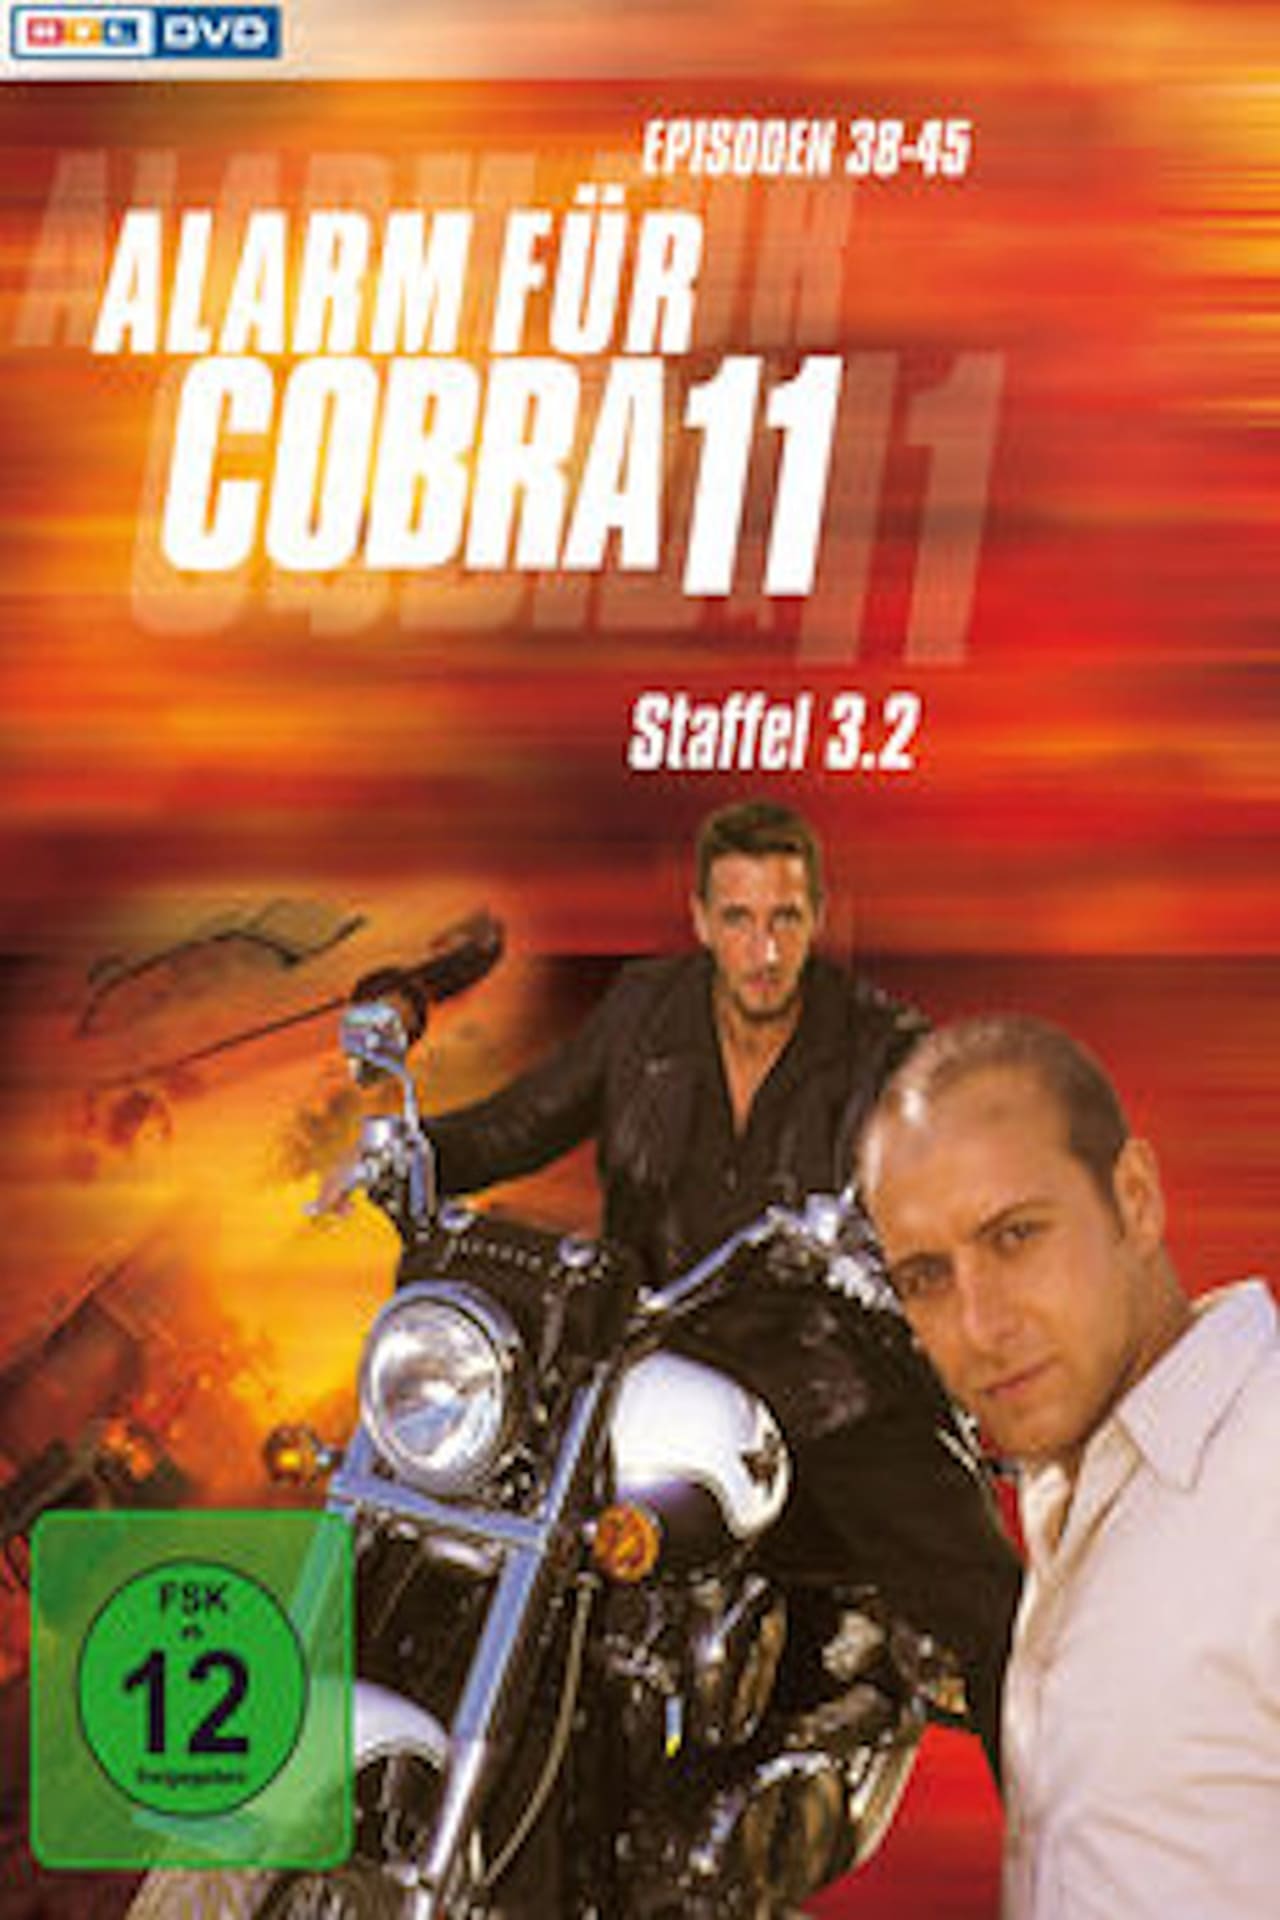 Alarm For Cobra 11: The Motorway Police Season 6